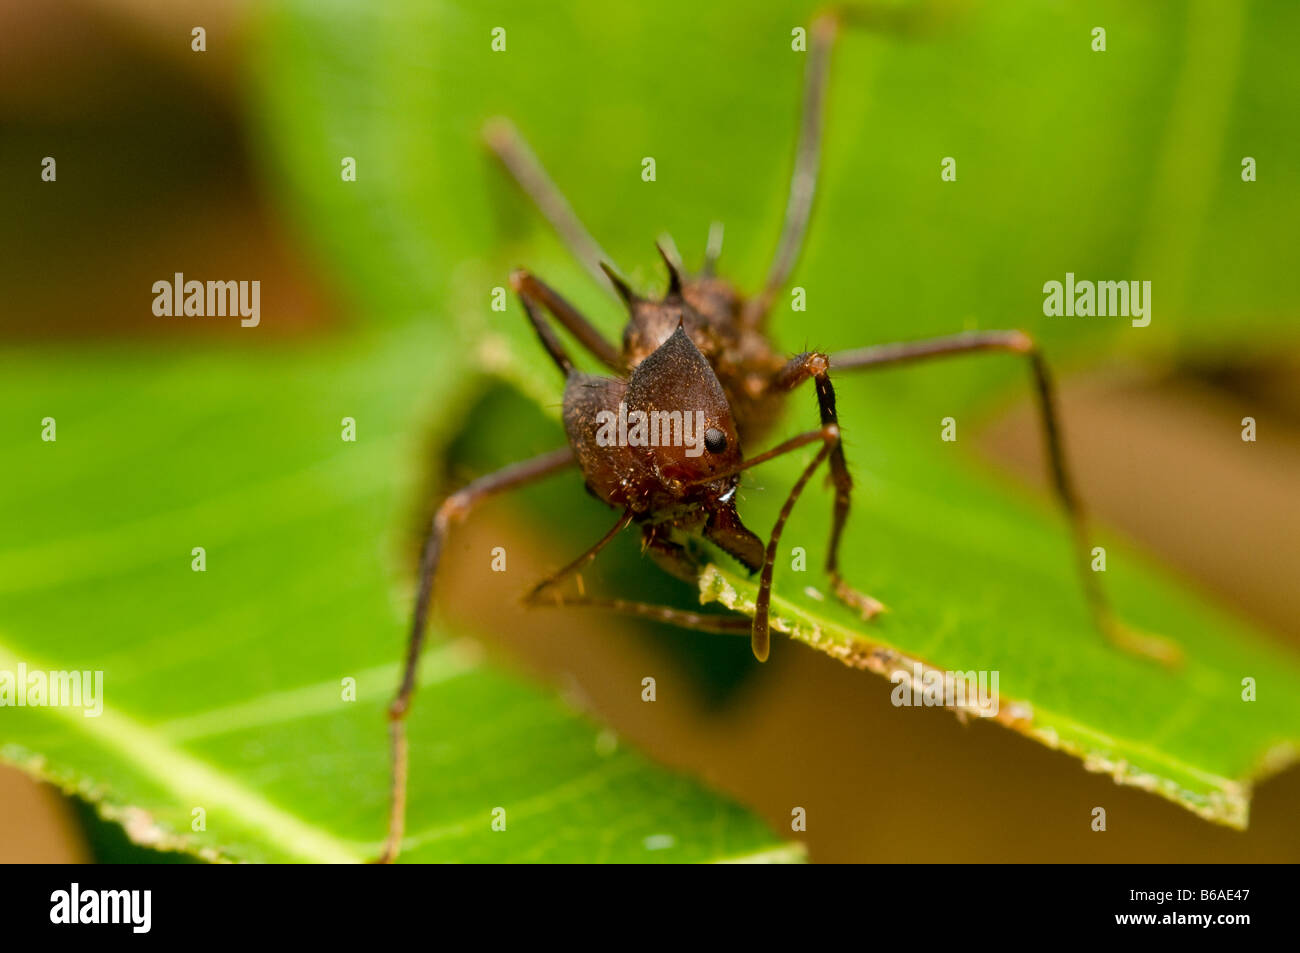 Blatt-Scherblock Ameise schneiden Blatt Atta SP Amazonas-Regenwald. Stockfoto